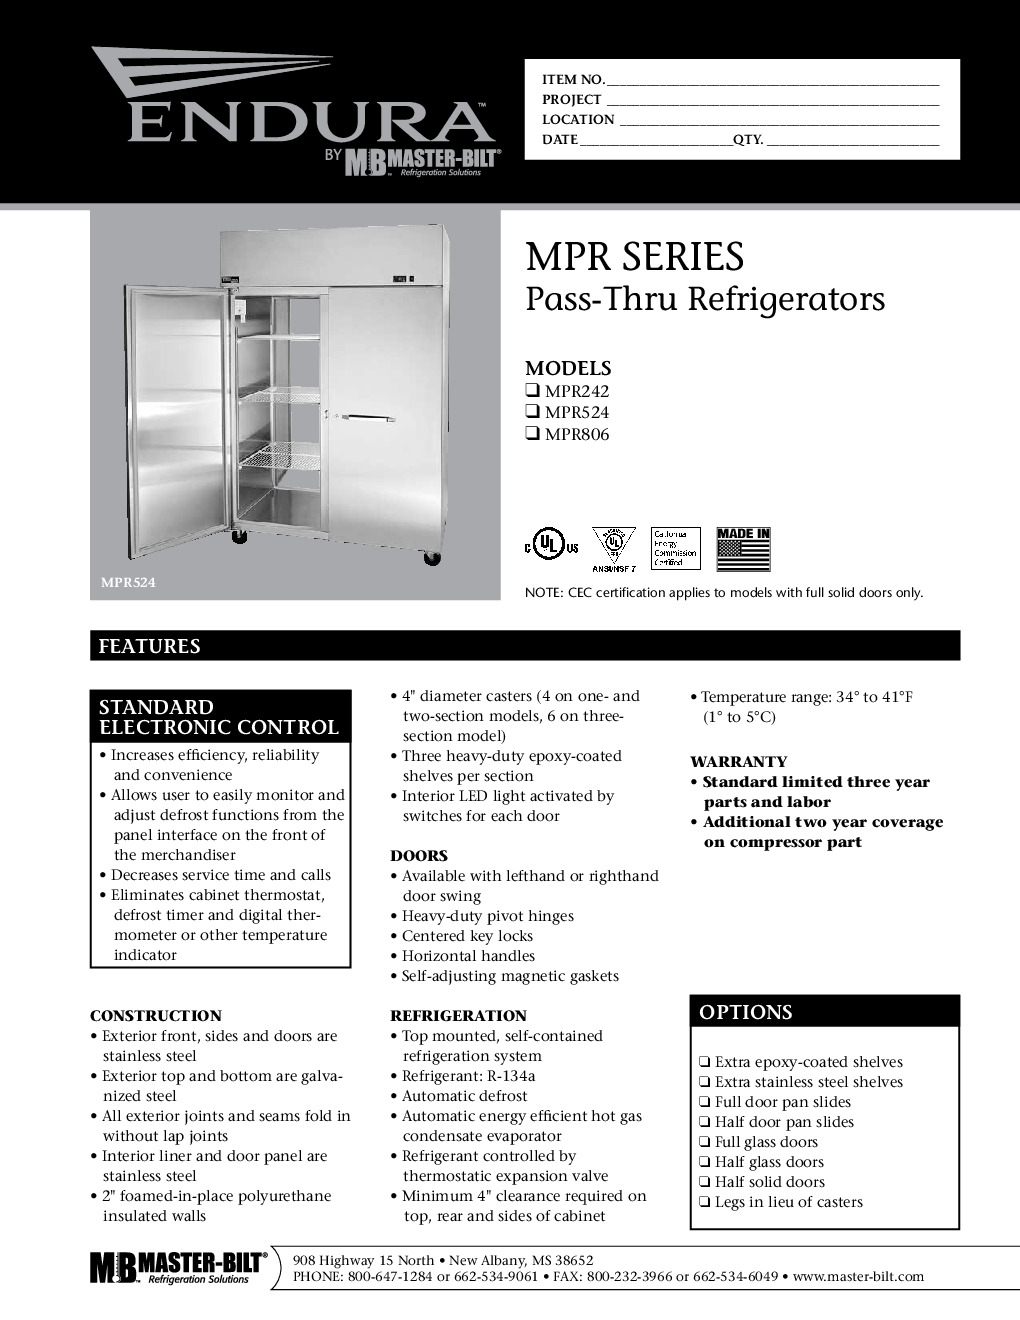 Master-Bilt MPR806SSS/0 Pass-Thru Refrigerator